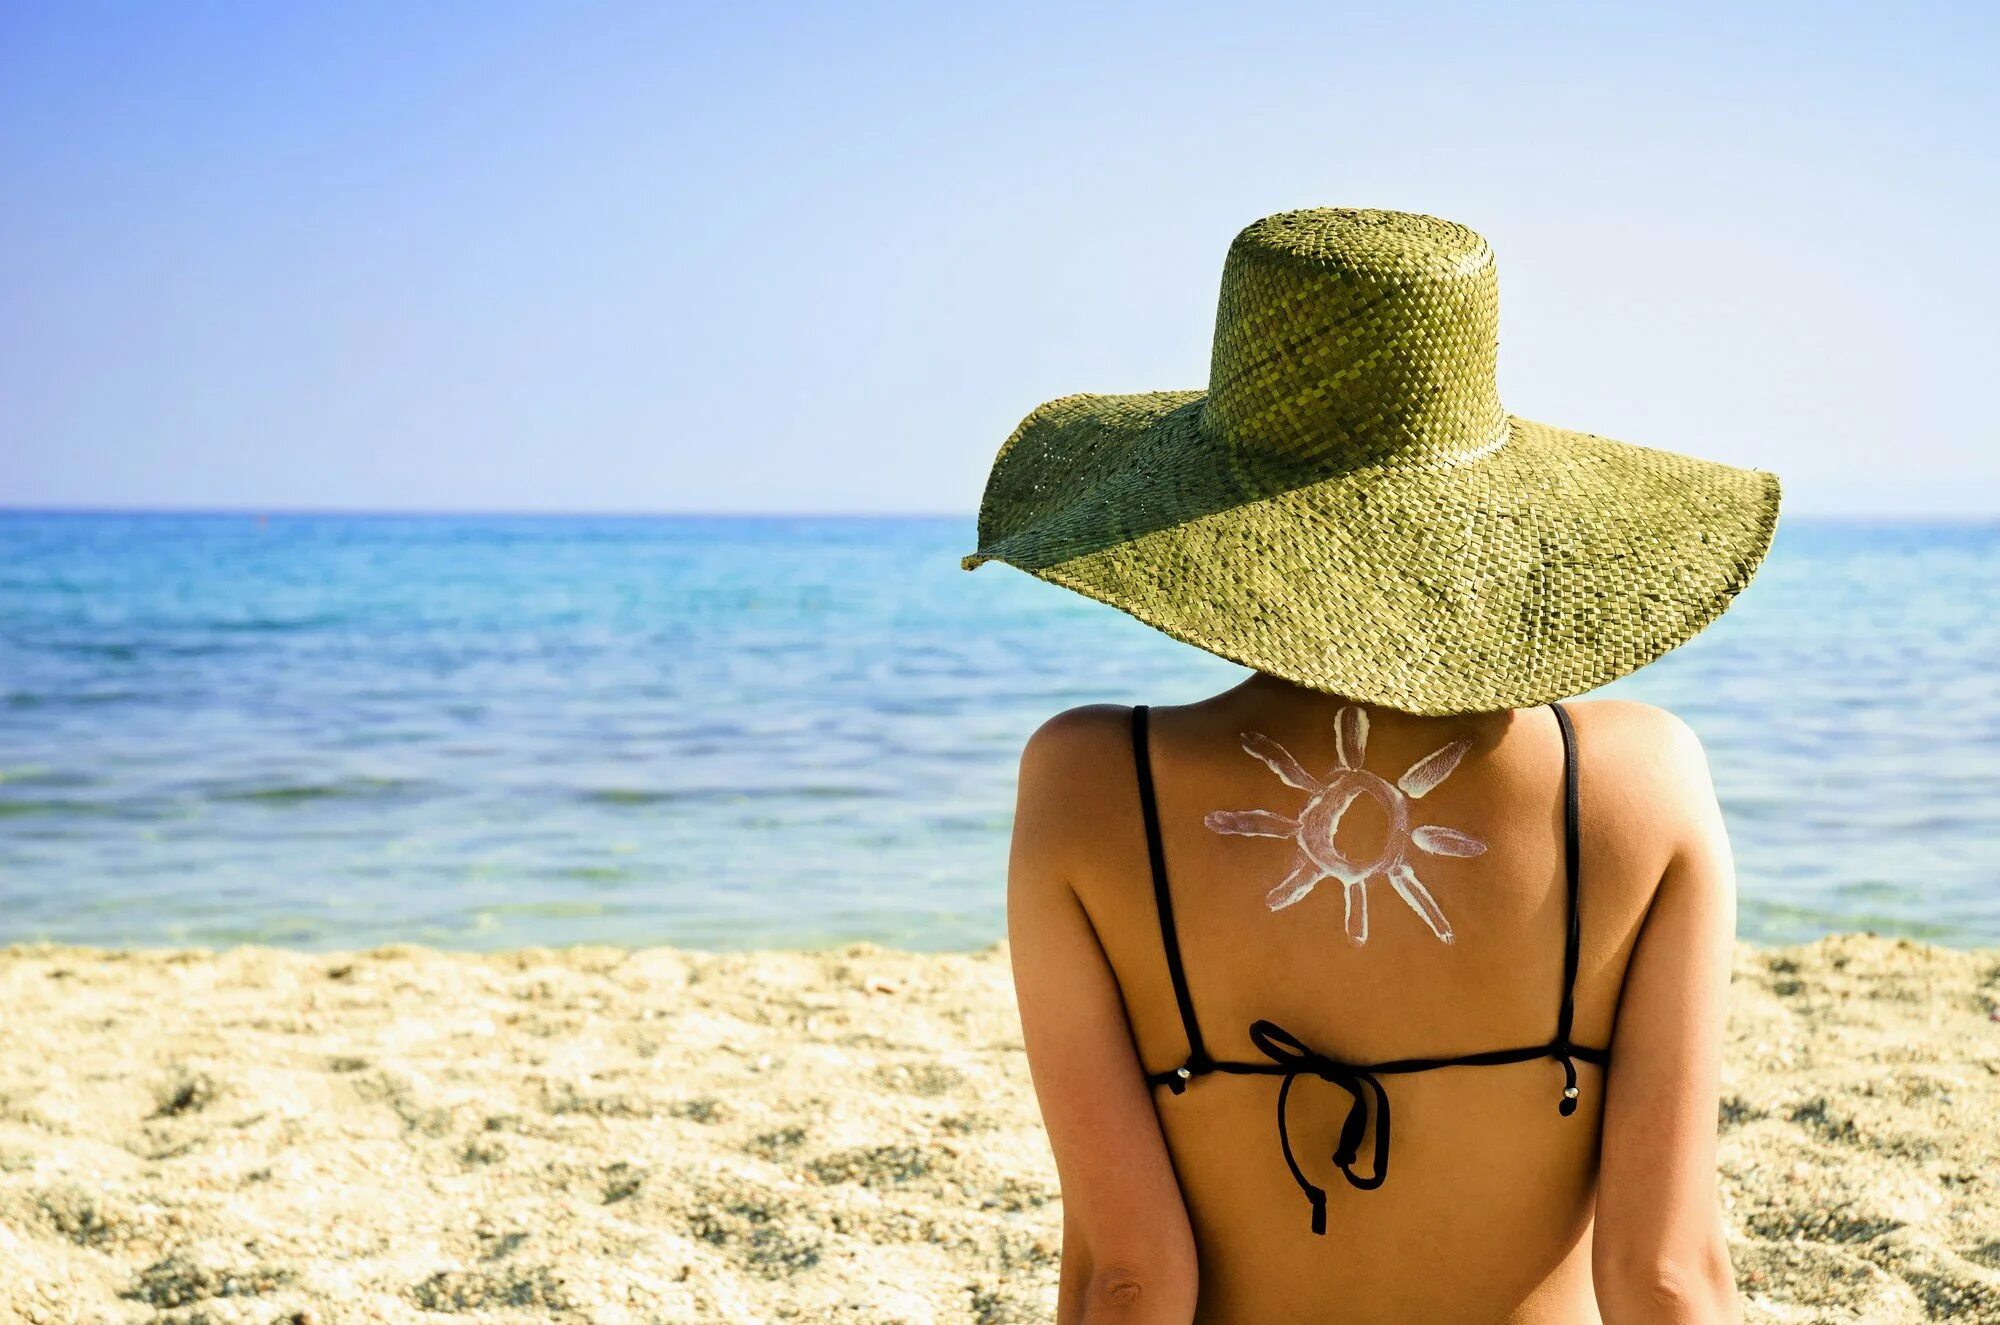 Продляем лето. Девушка в шляпе на море. Девушка в шляпе на пляже. Солнце море пляж девушка в шляпе. Солнце пляж девушка.